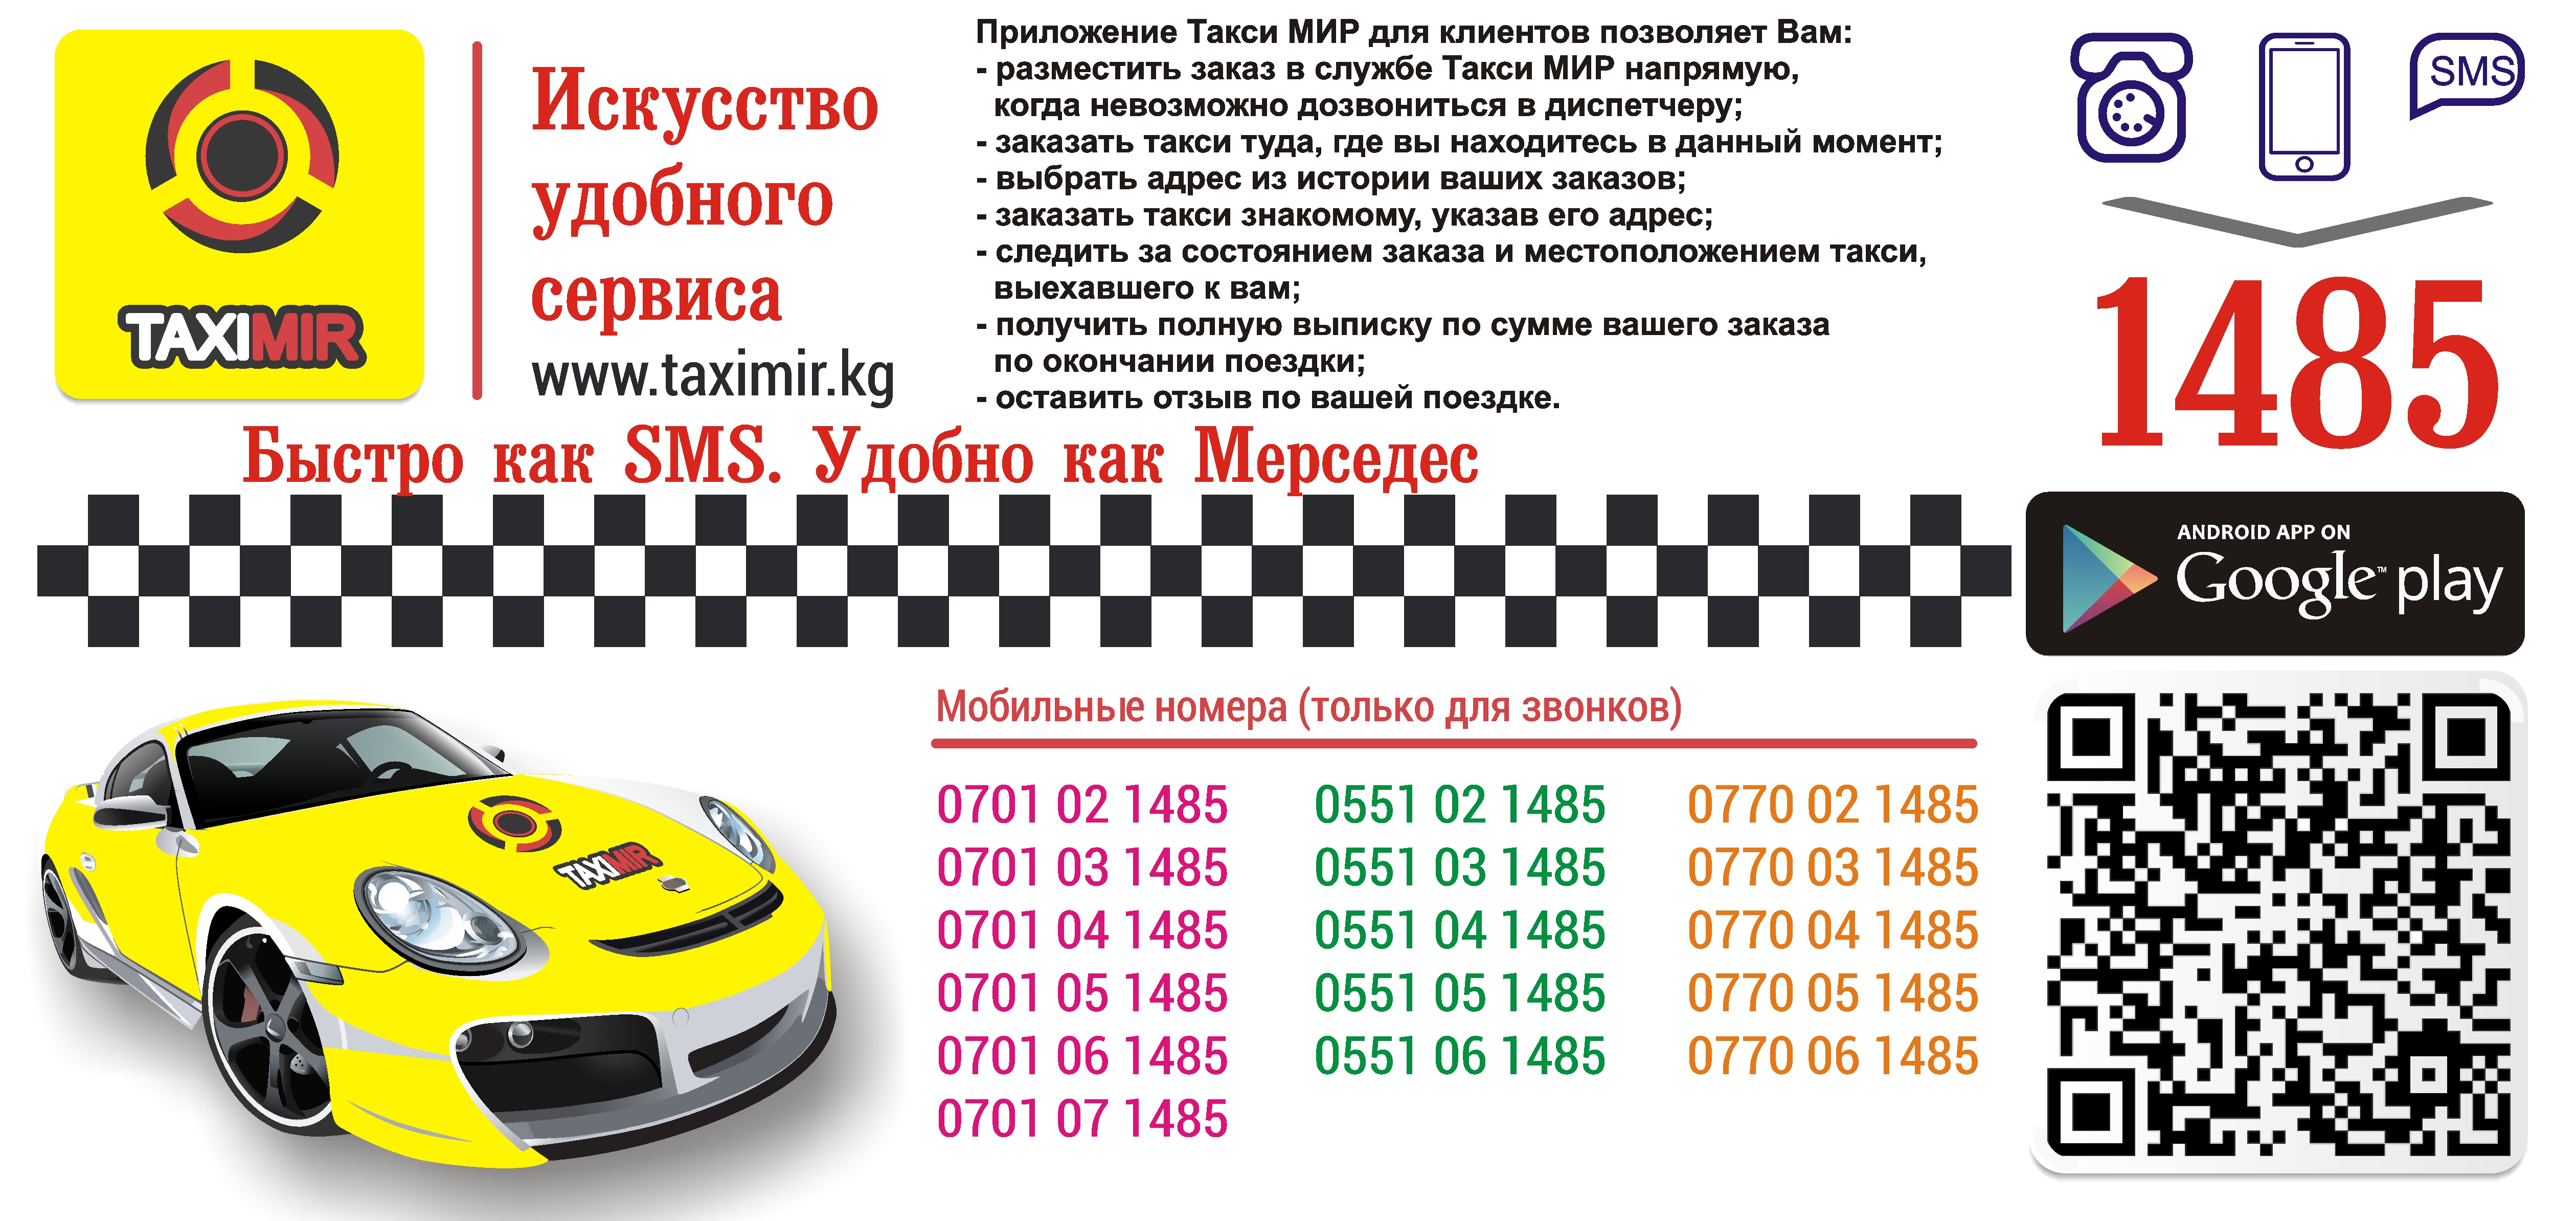 Номер телефона камчатского такси. Такси мир. Смс такси. Такси Бишкек номер.